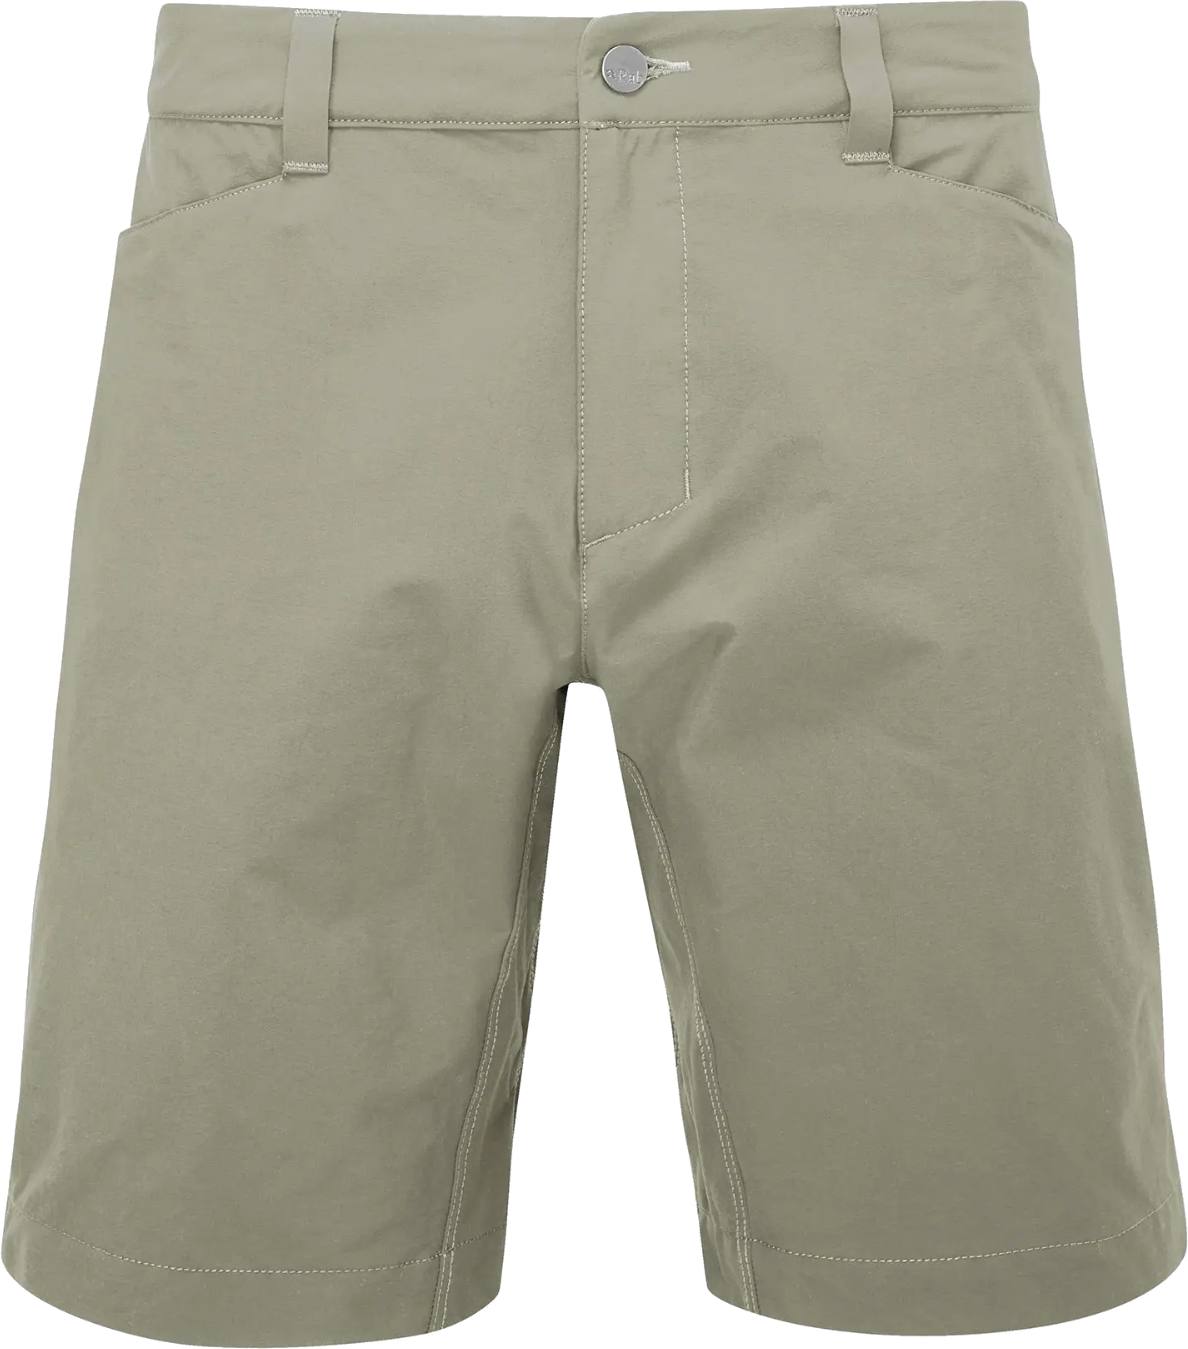 Rab Men's Capstone Shorts